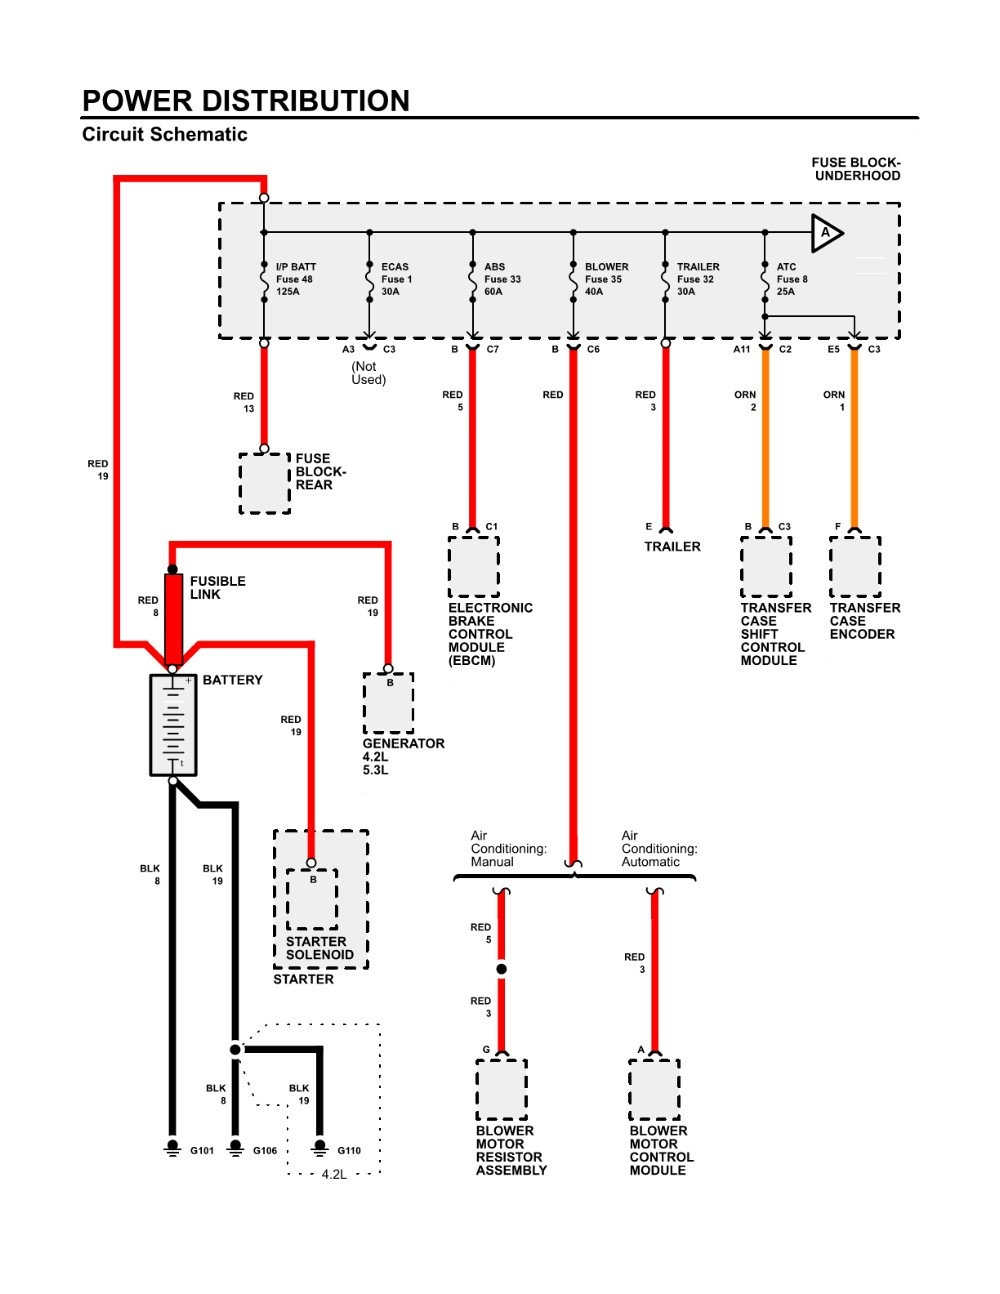 Blower Motor Resistor Wiring Diagram | Wiring Library - 2005 Chevy Silverado Blower Motor Resistor Wiring Diagram